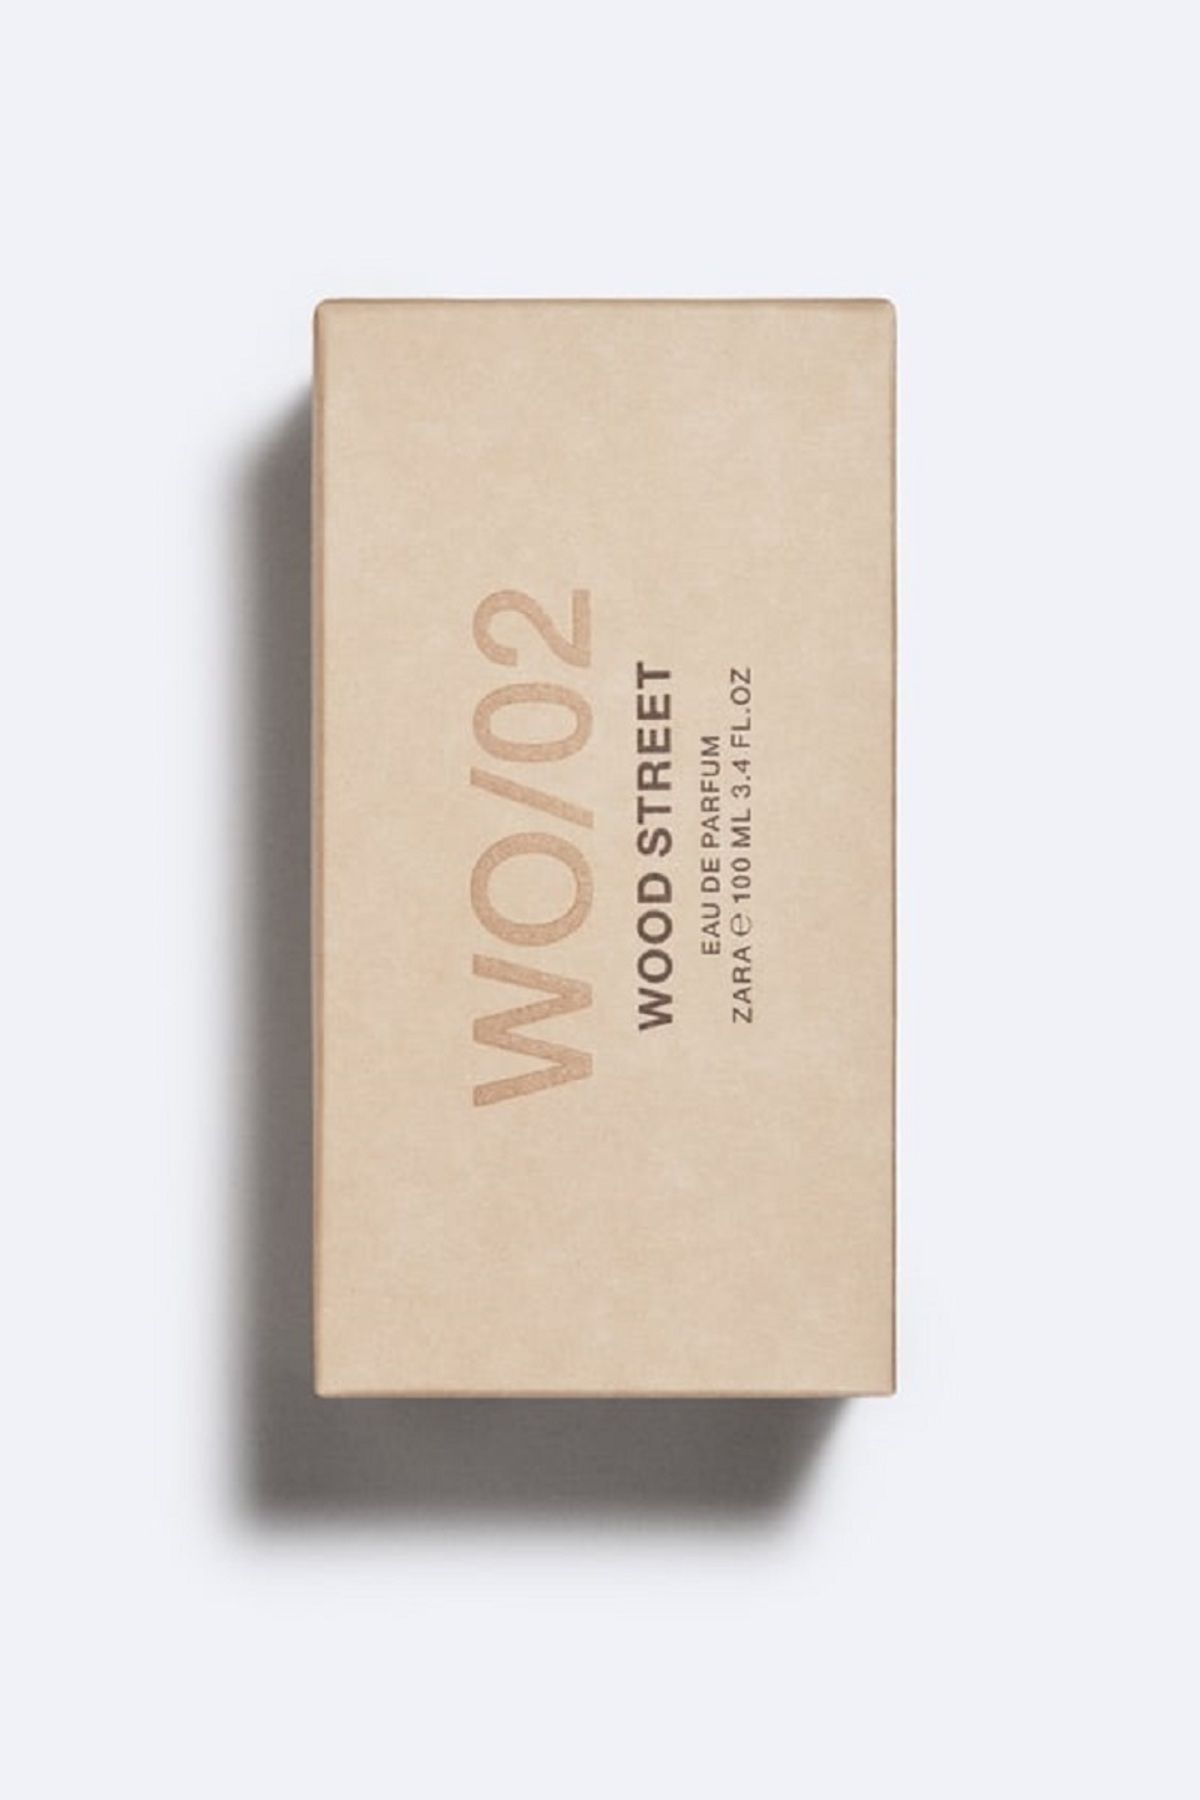 Zara WO/02 WOOD STREET ادوپرفیوم 100 ml عطر مردانه نسخه ویژه